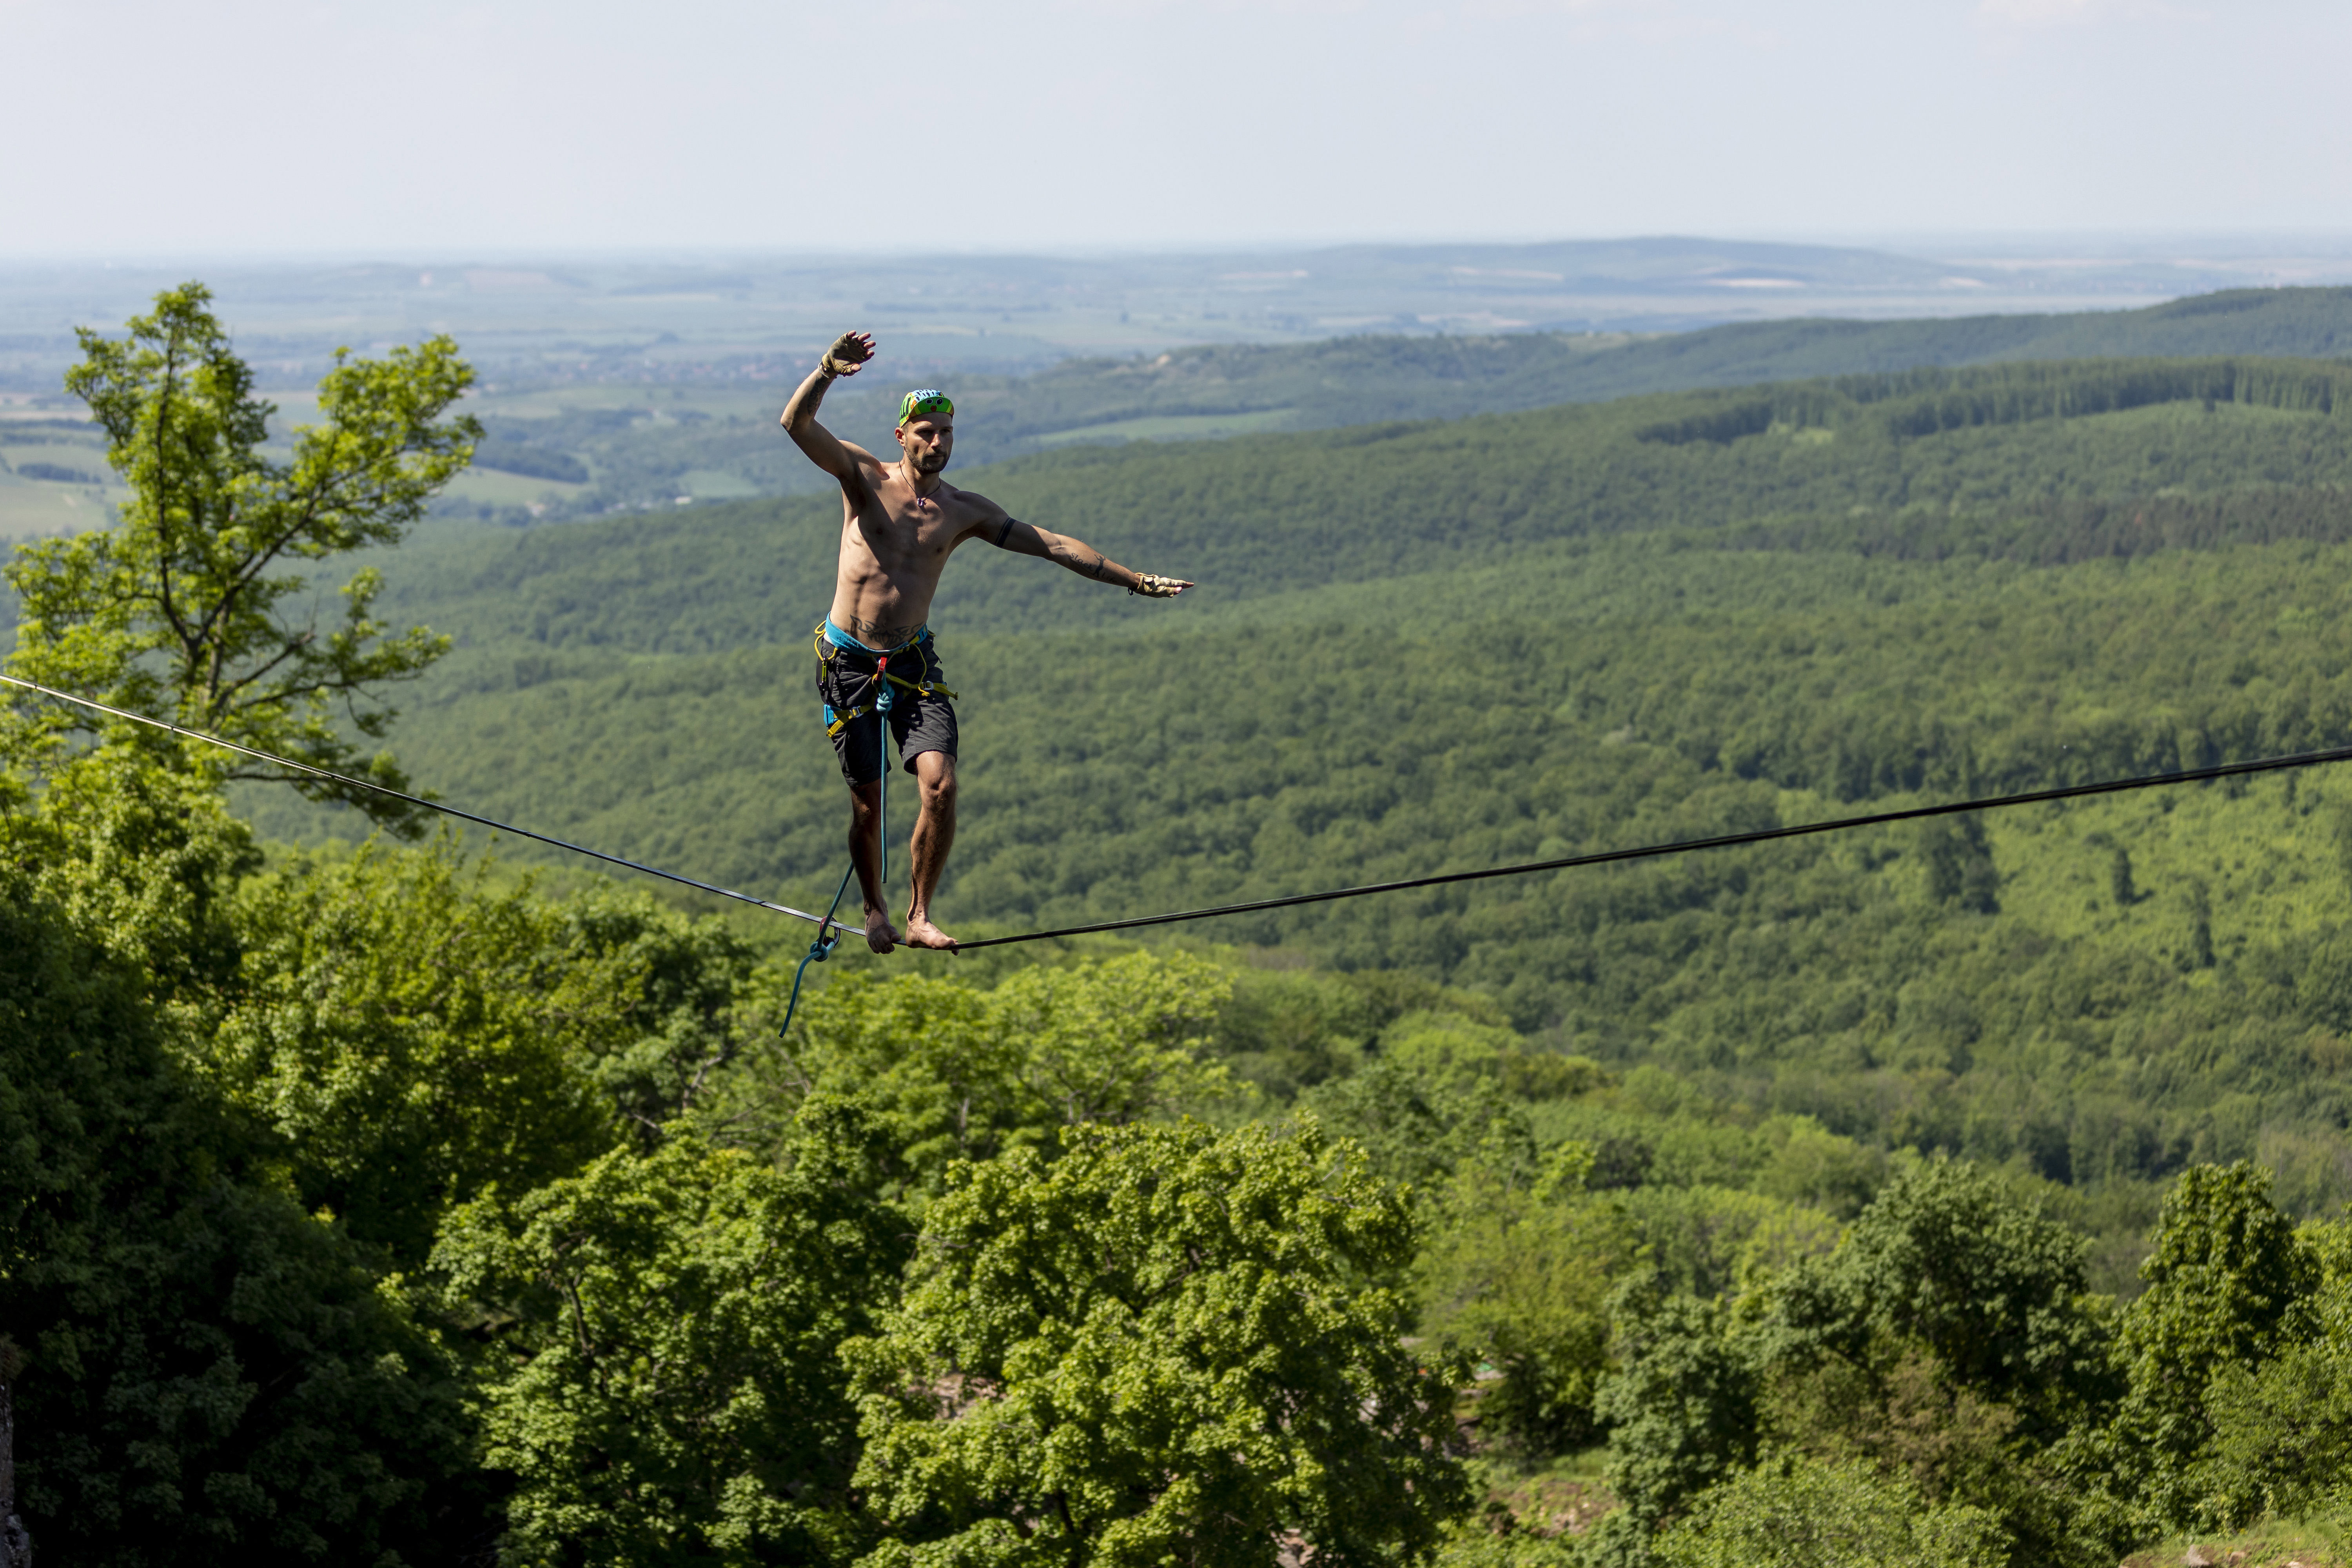 KisGeri 24 Rock climbing and Highline Festival in Hungary